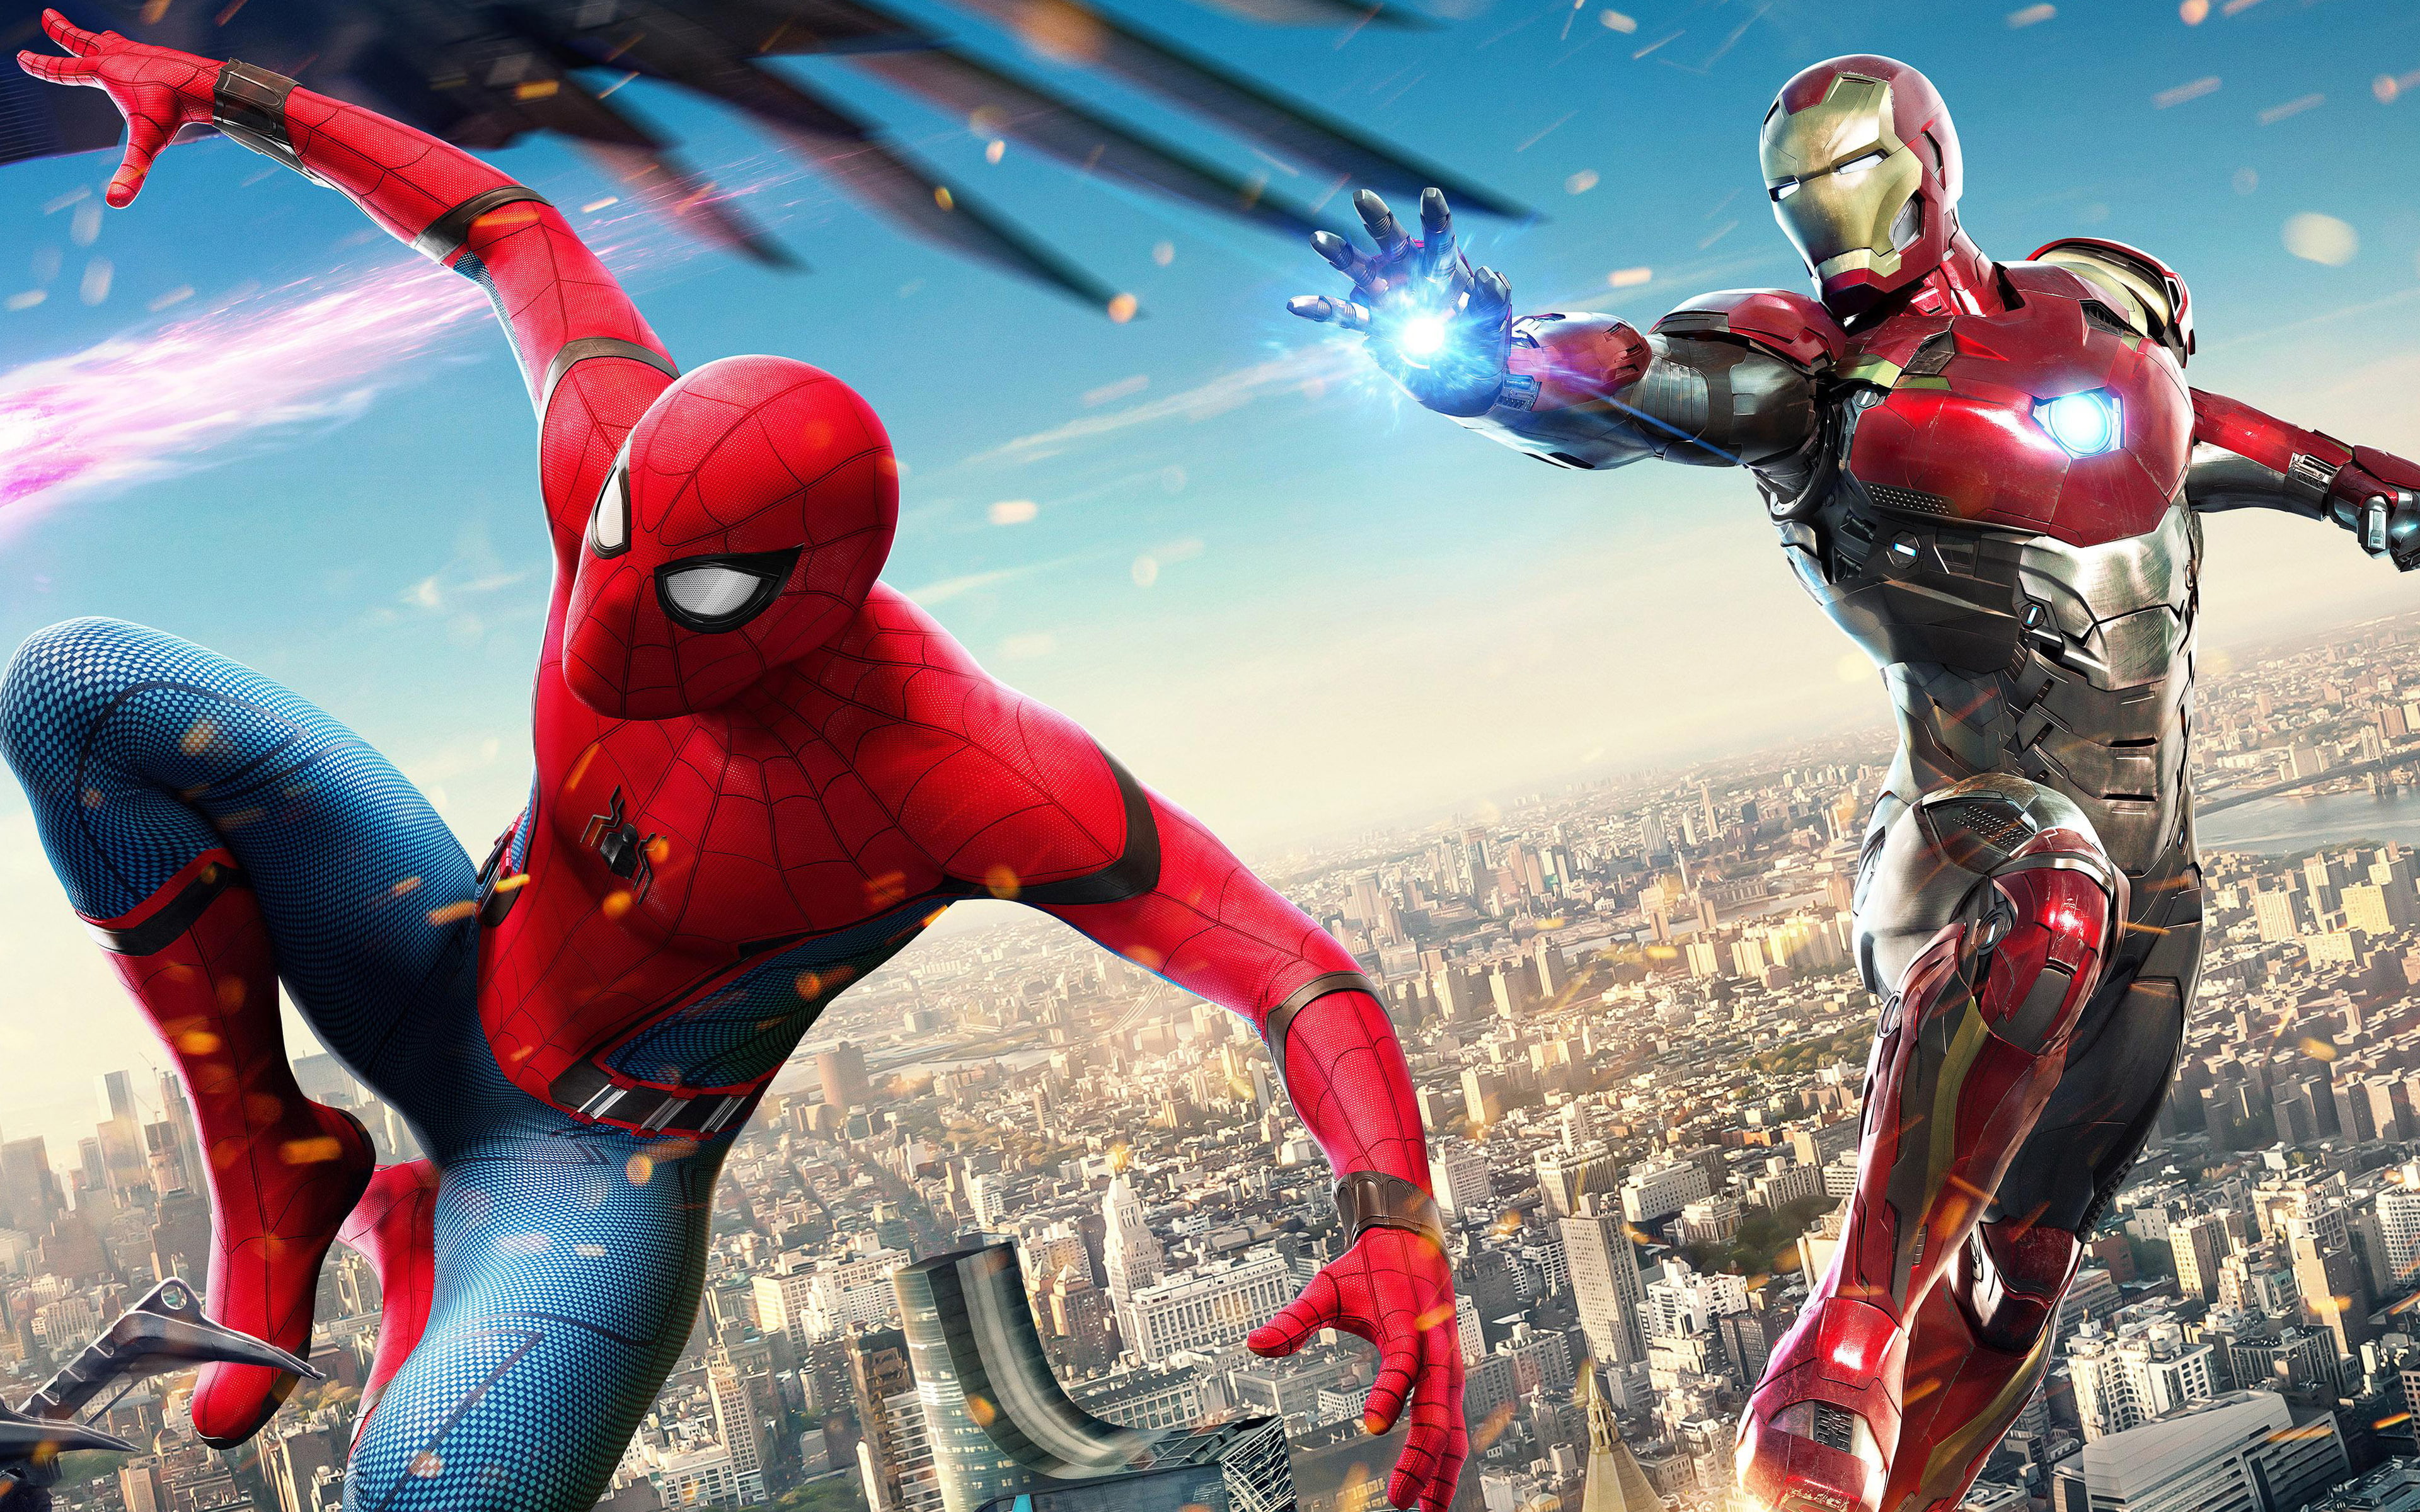 Iron Man Spiderman Homecoming 4K, headwear, helmet, sports helmet